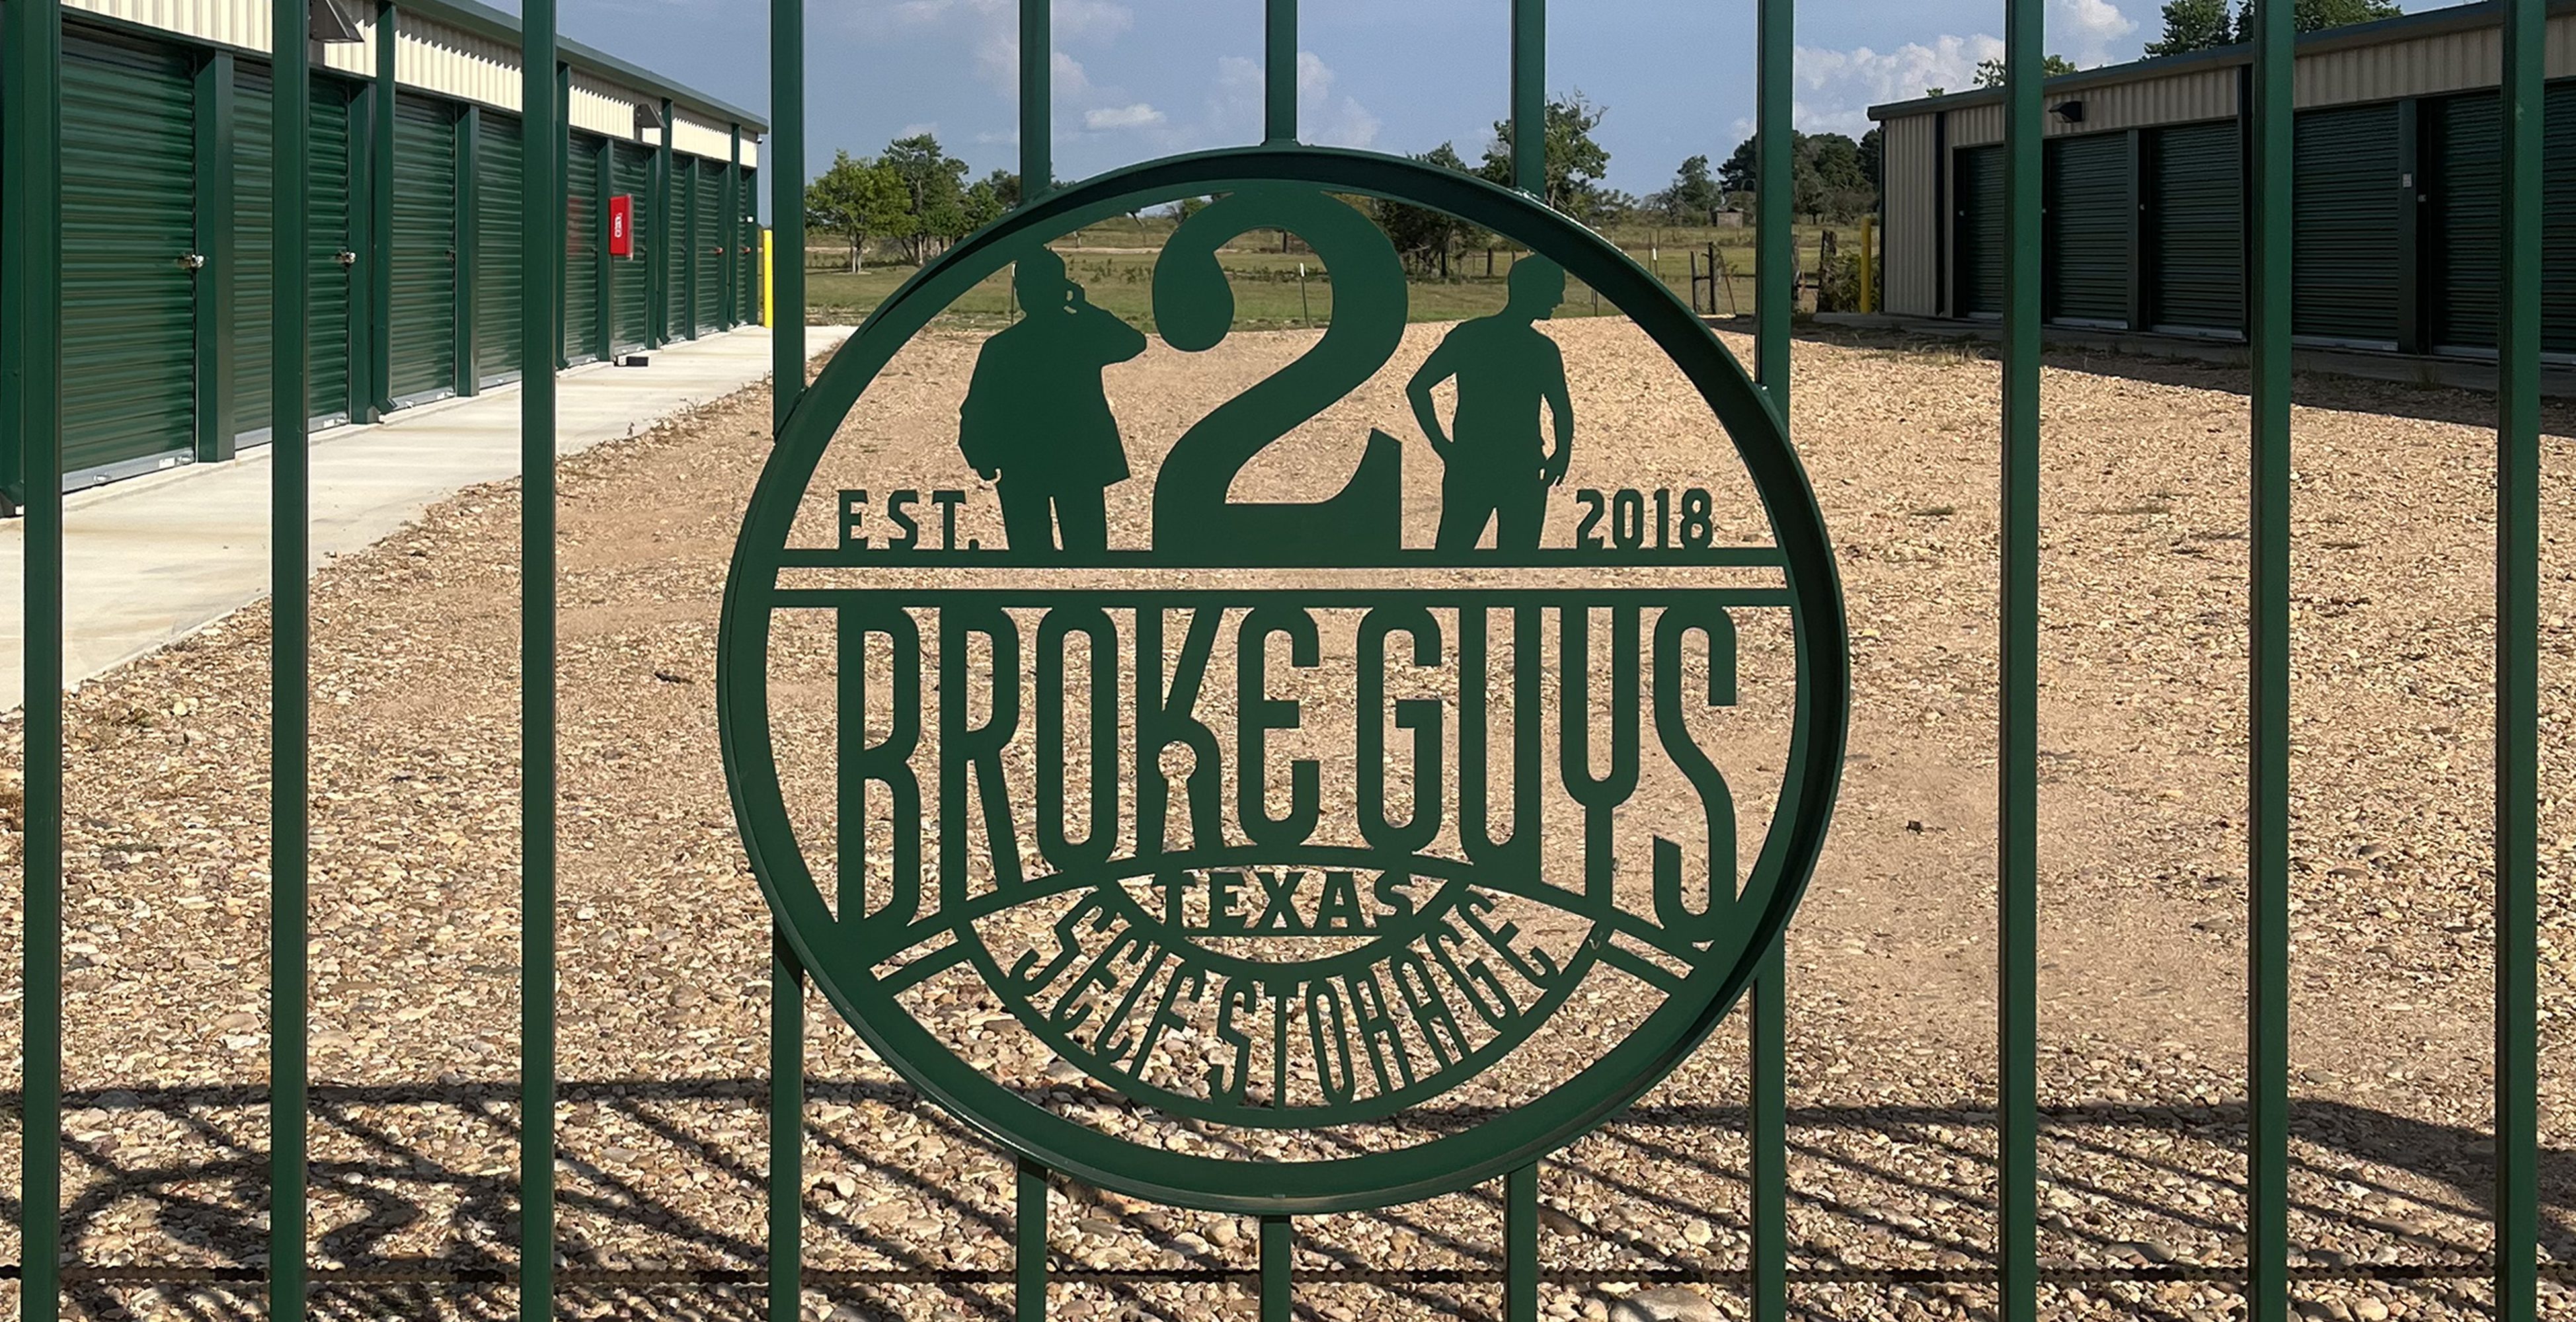 2 Broke Guys self storage units in Sealy, Texas 77474